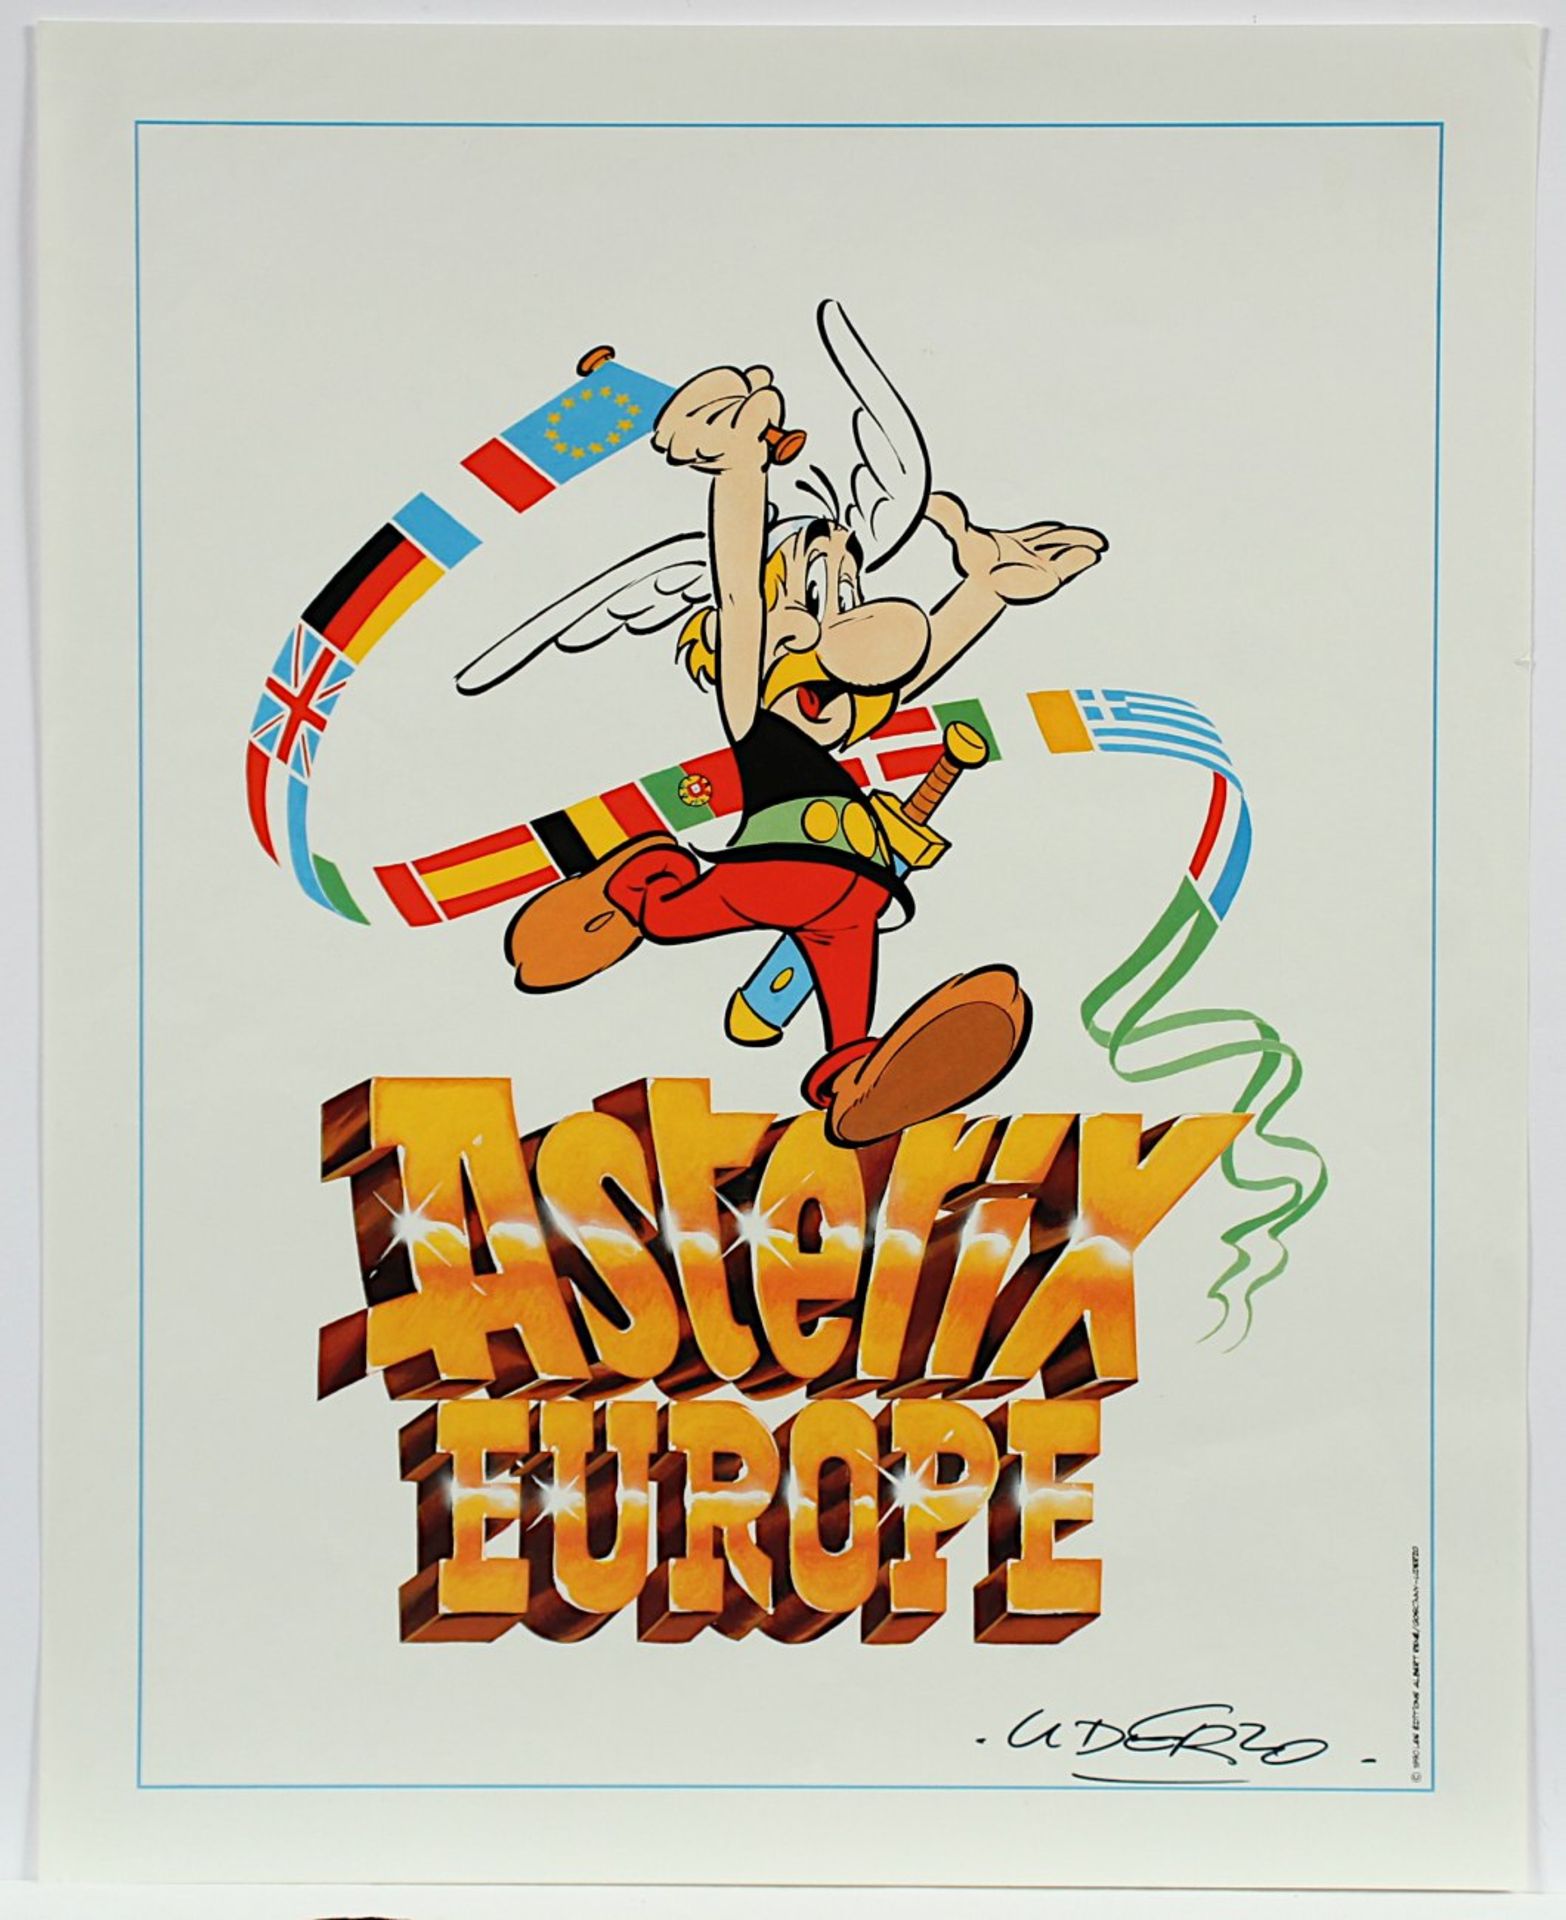 UDERZO, Albert, "Asterix Europe", Plakat, Farboffset, 49 x 40, handsigniert, 1990, signiert,